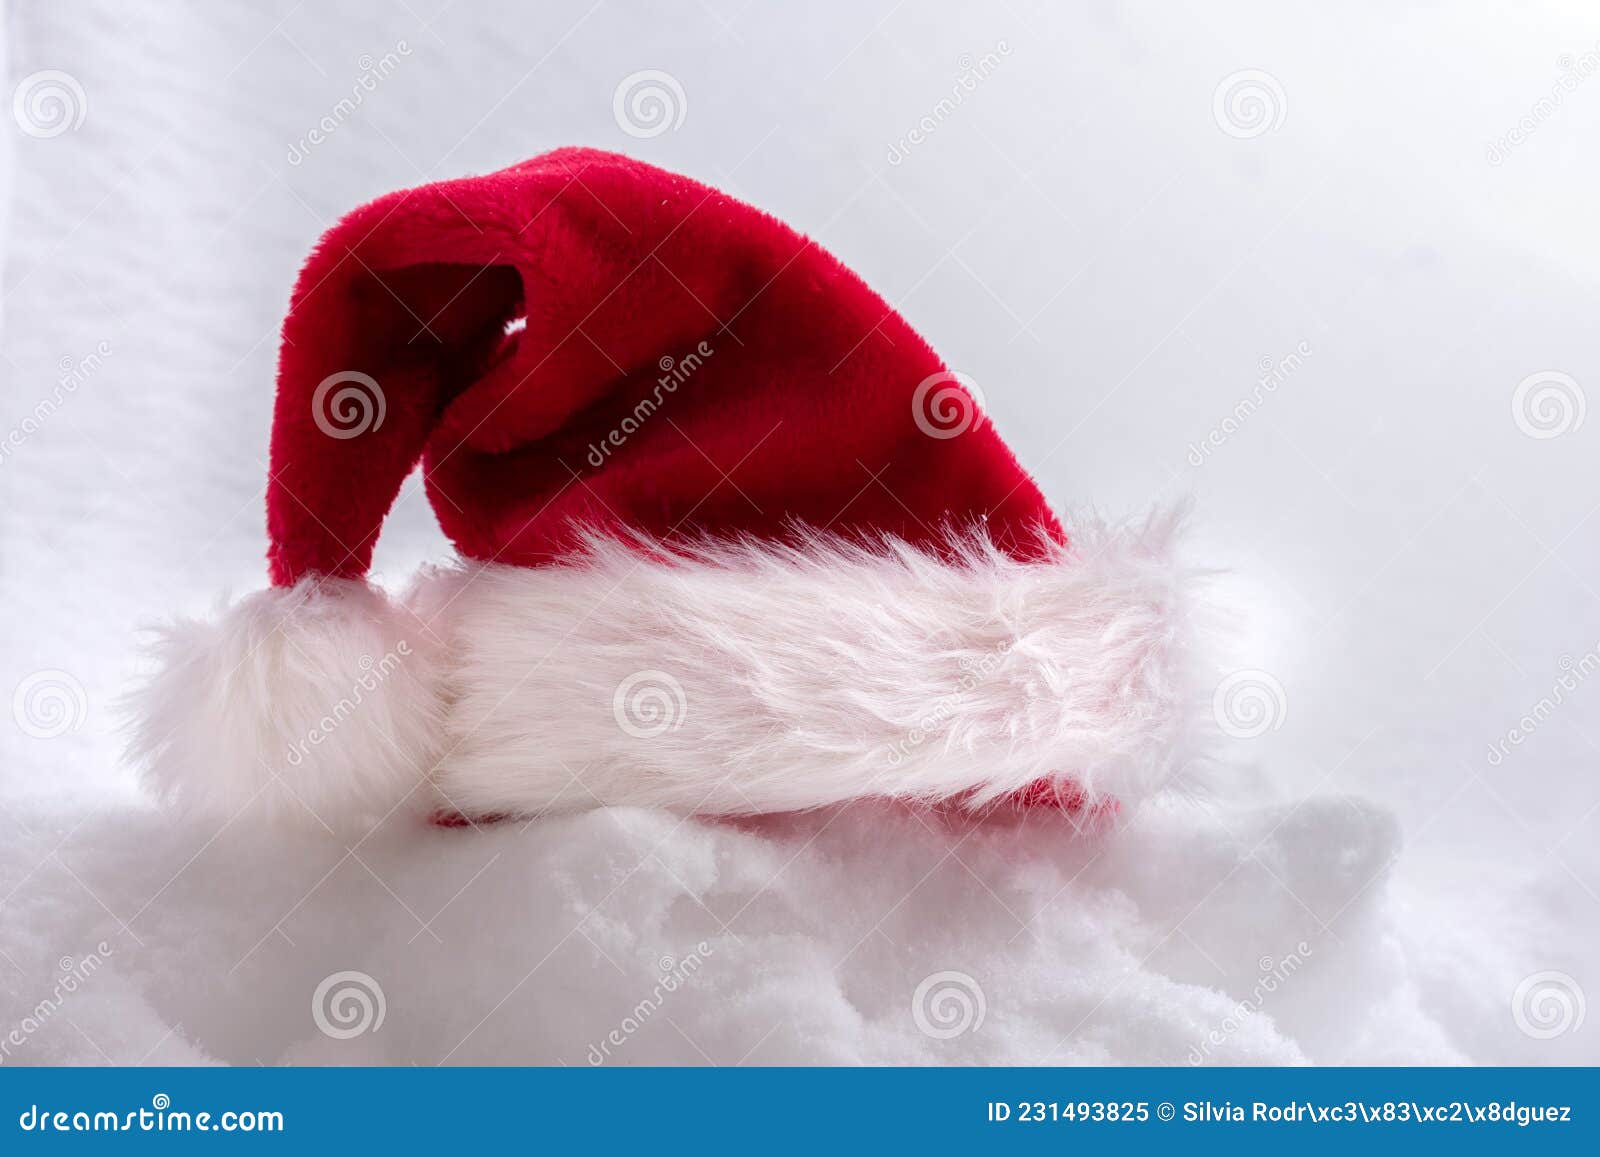 papa noel`s hat on snow background